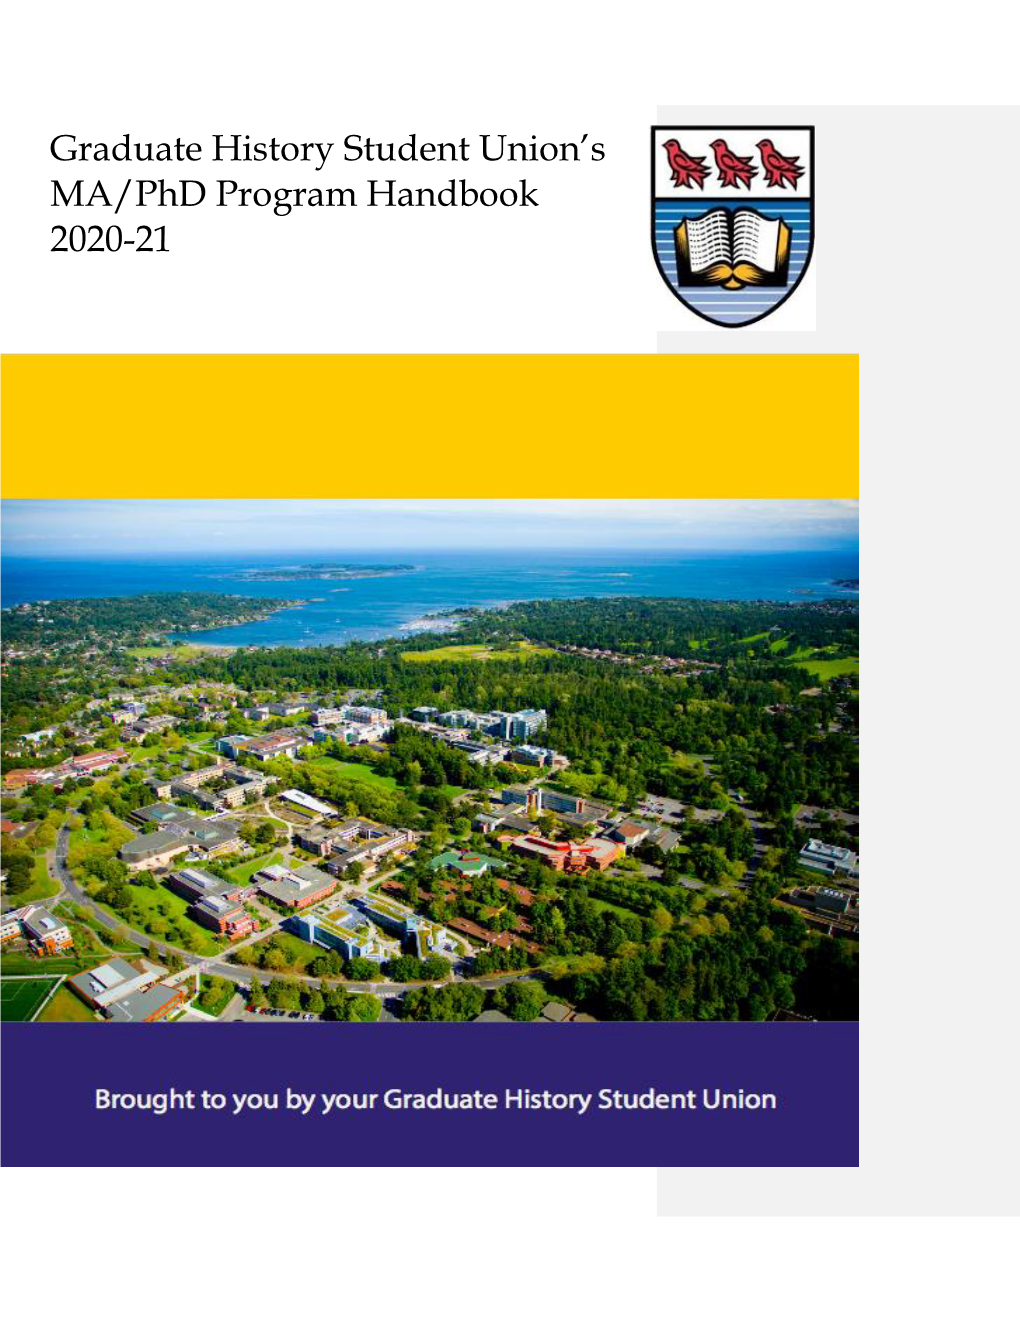 Graduate History Student Union's MA/Phd Program Handbook 2020-21